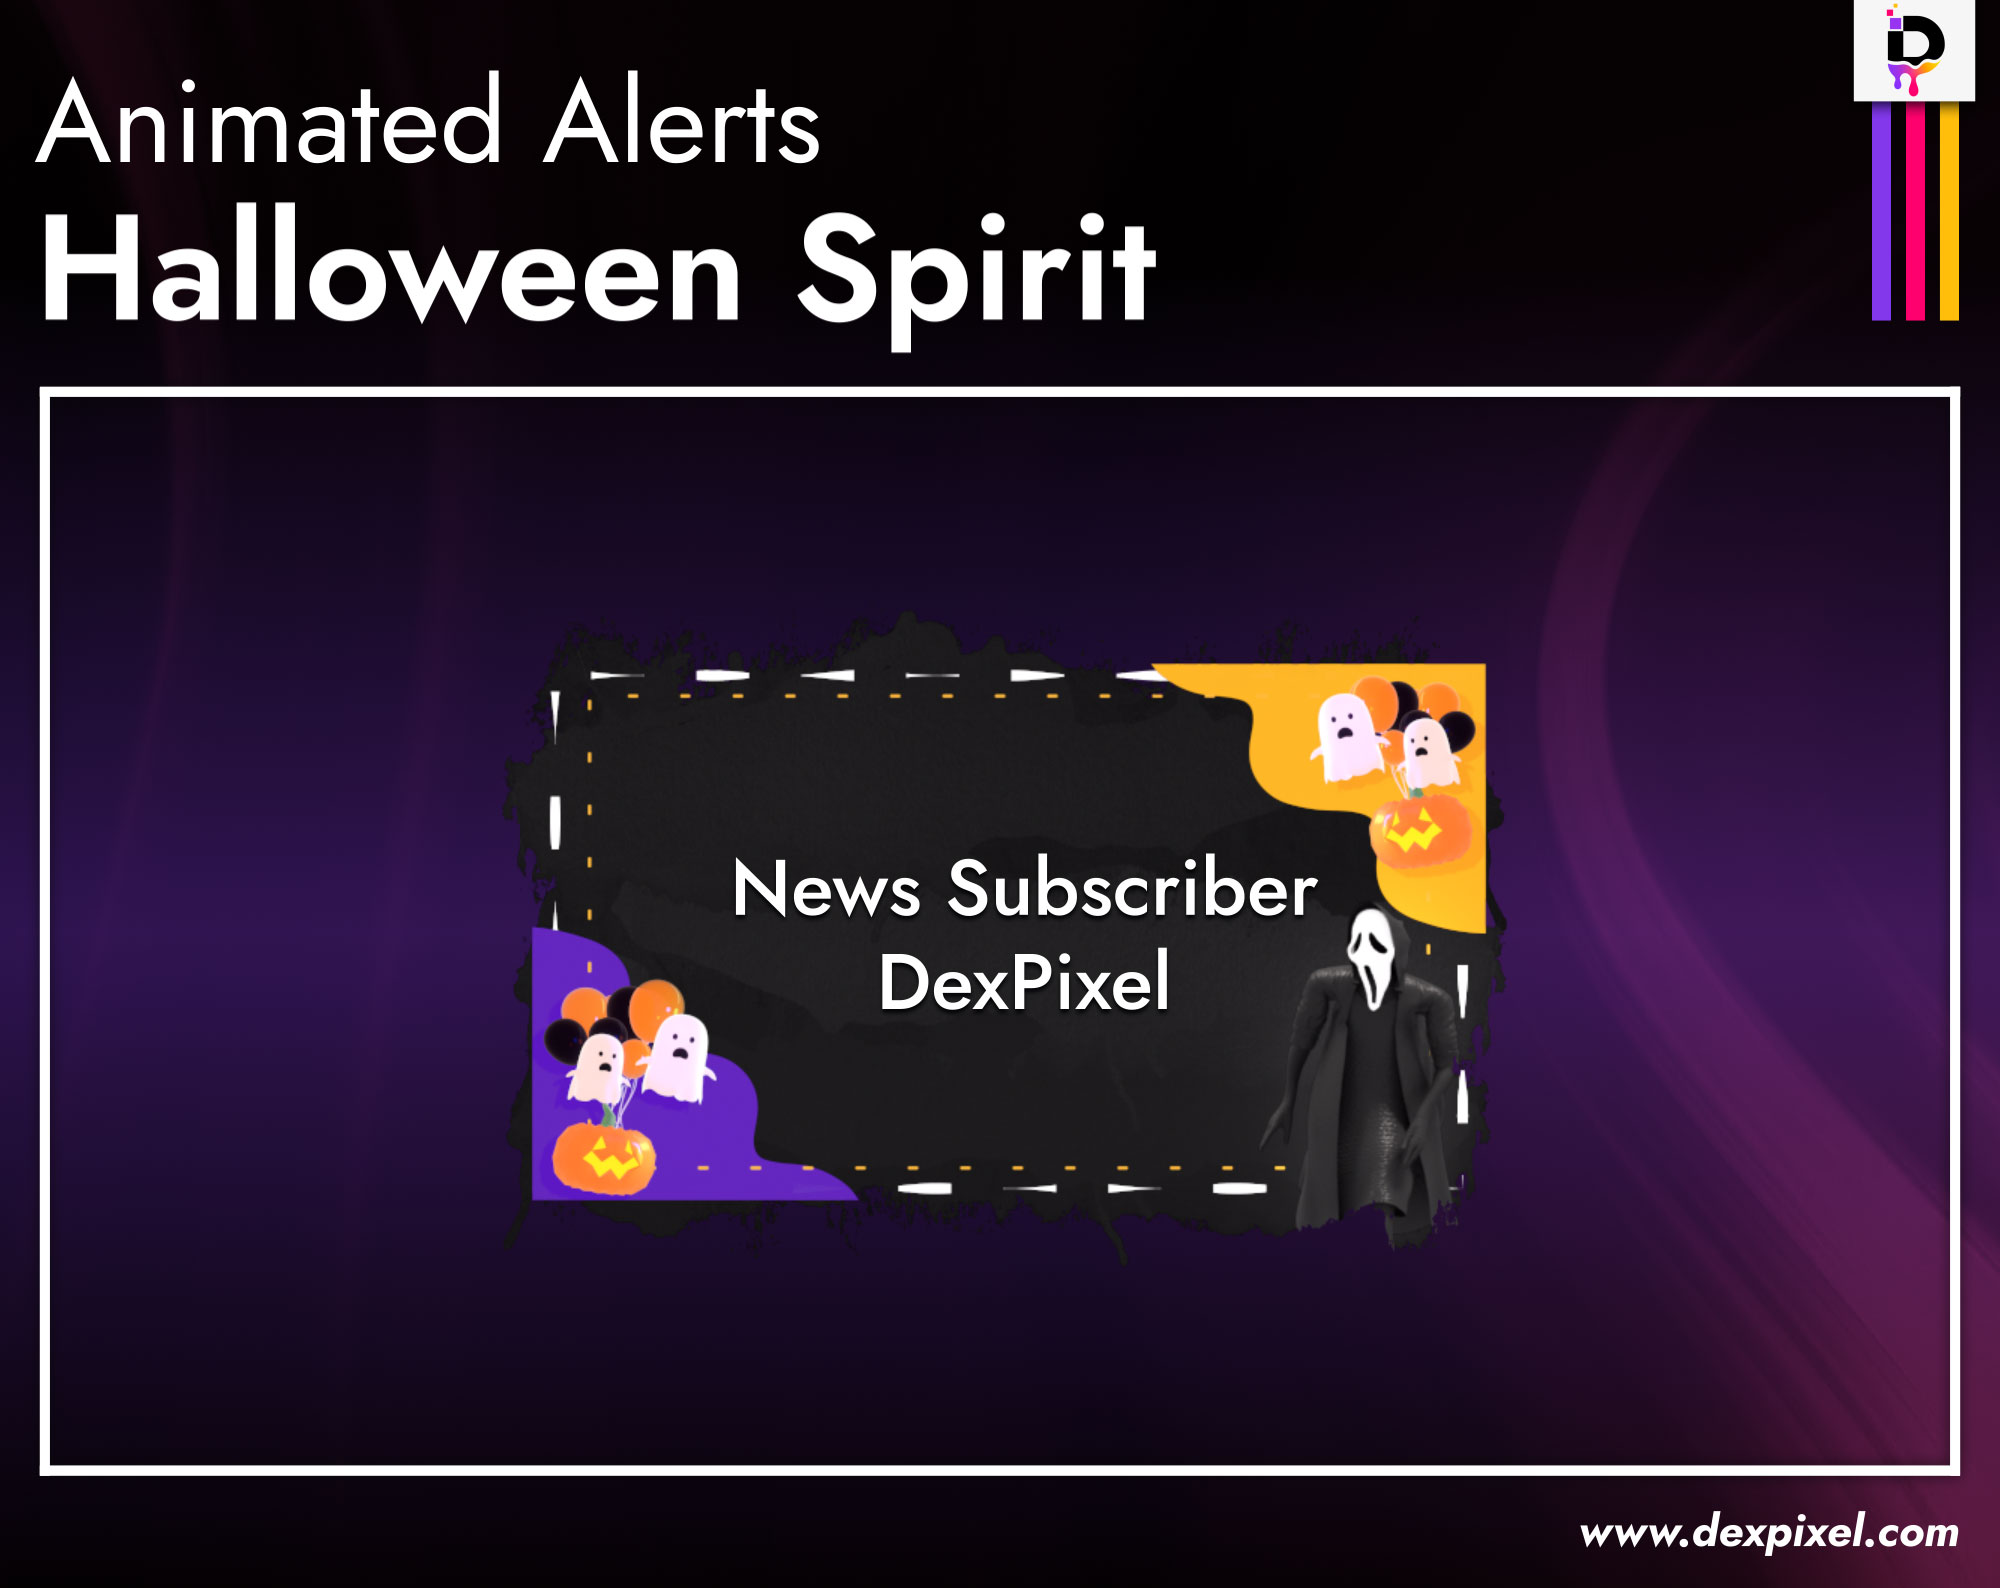 Animated Alerts Dexpixel Halloween Spirit